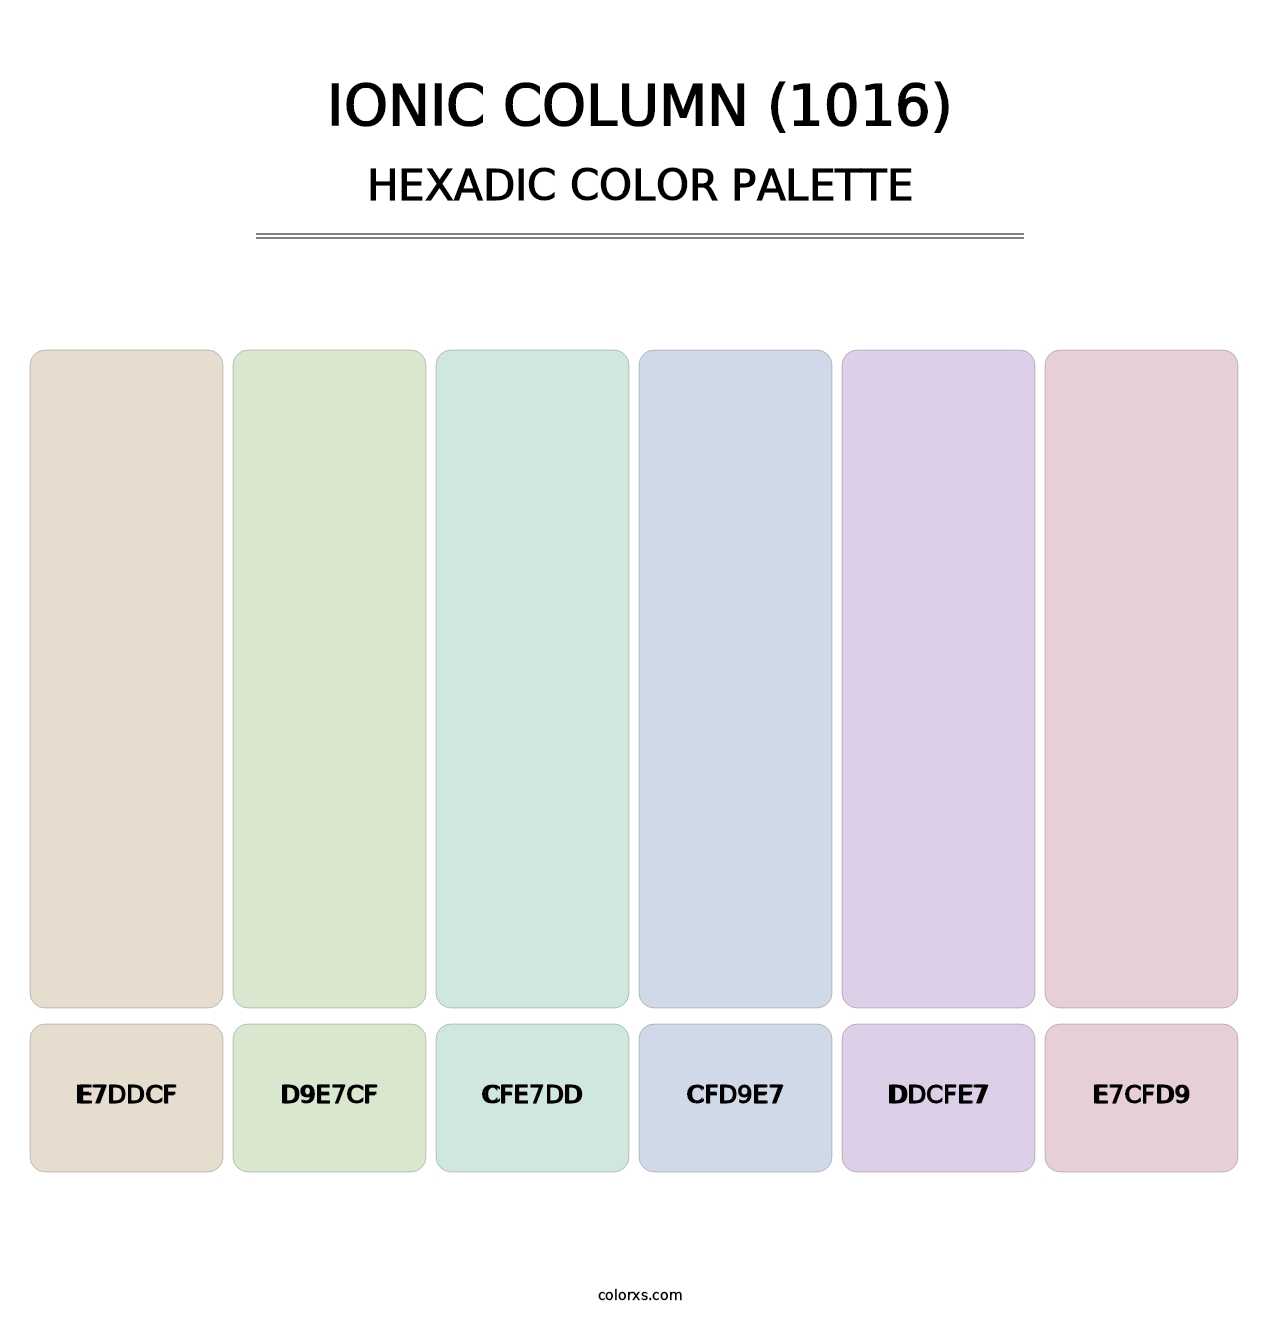 Ionic Column (1016) - Hexadic Color Palette